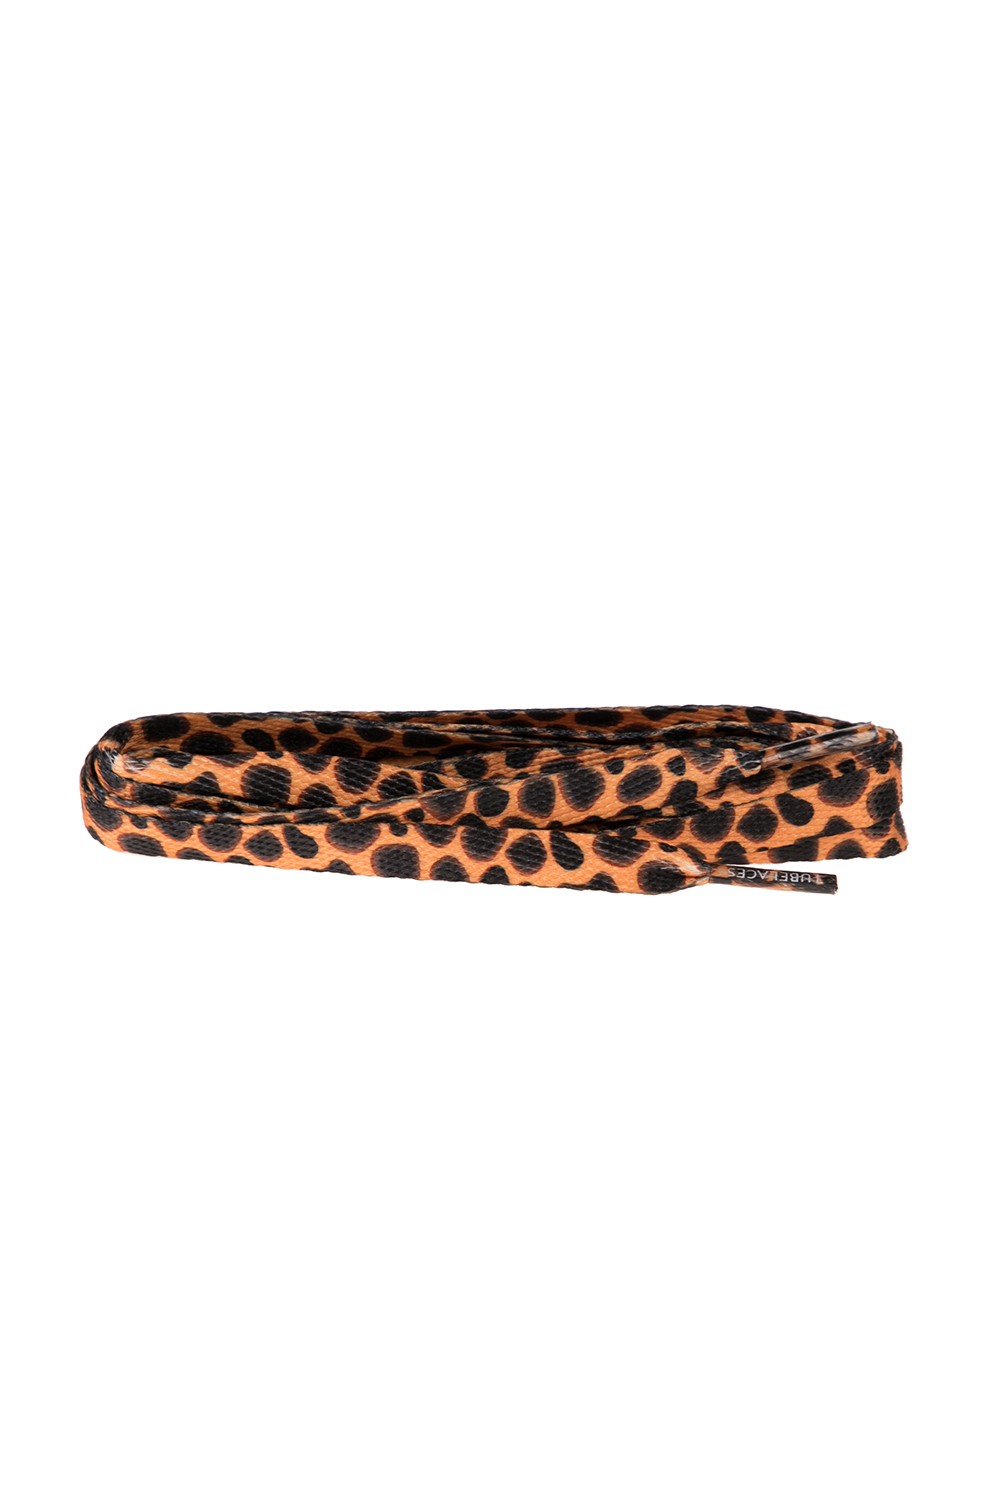 TUBELACES - Κορδόνια παπούτσιών TUBELACES SPECIAL FLAT καφέ leopard Γυναικεία/Αξεσουάρ/Κορδόνια